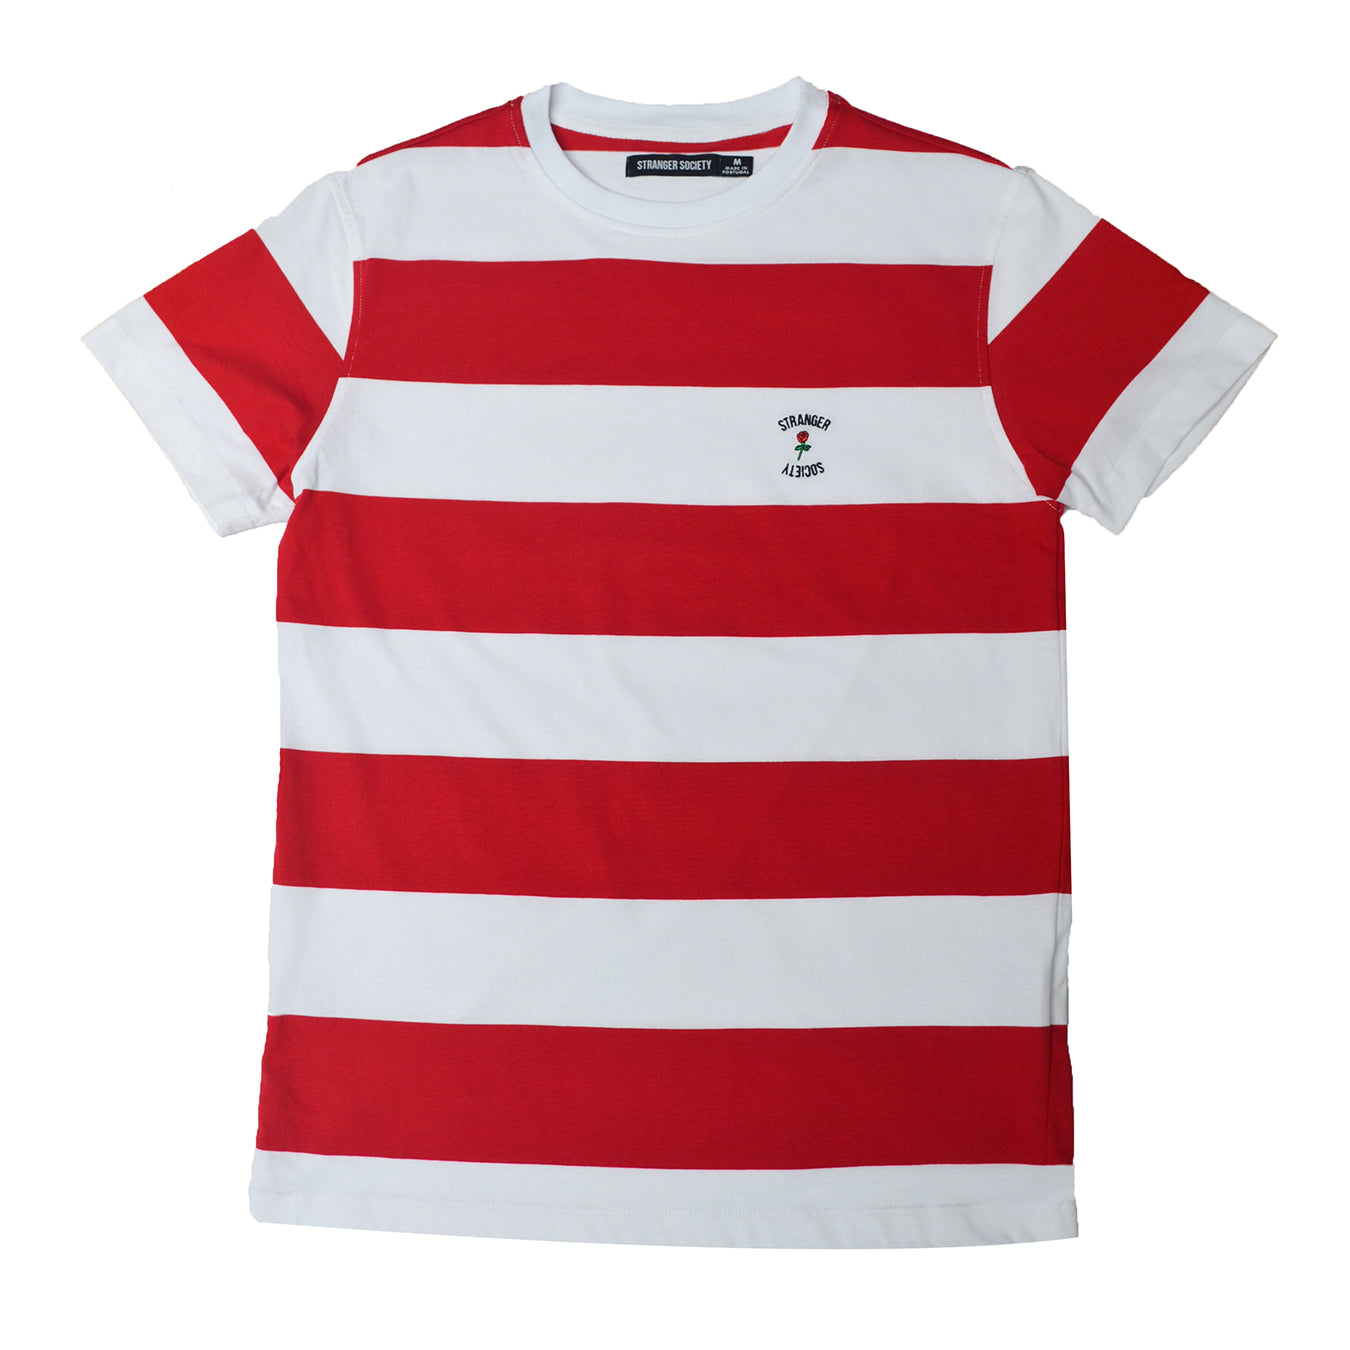 Crew stripe t-shirt red